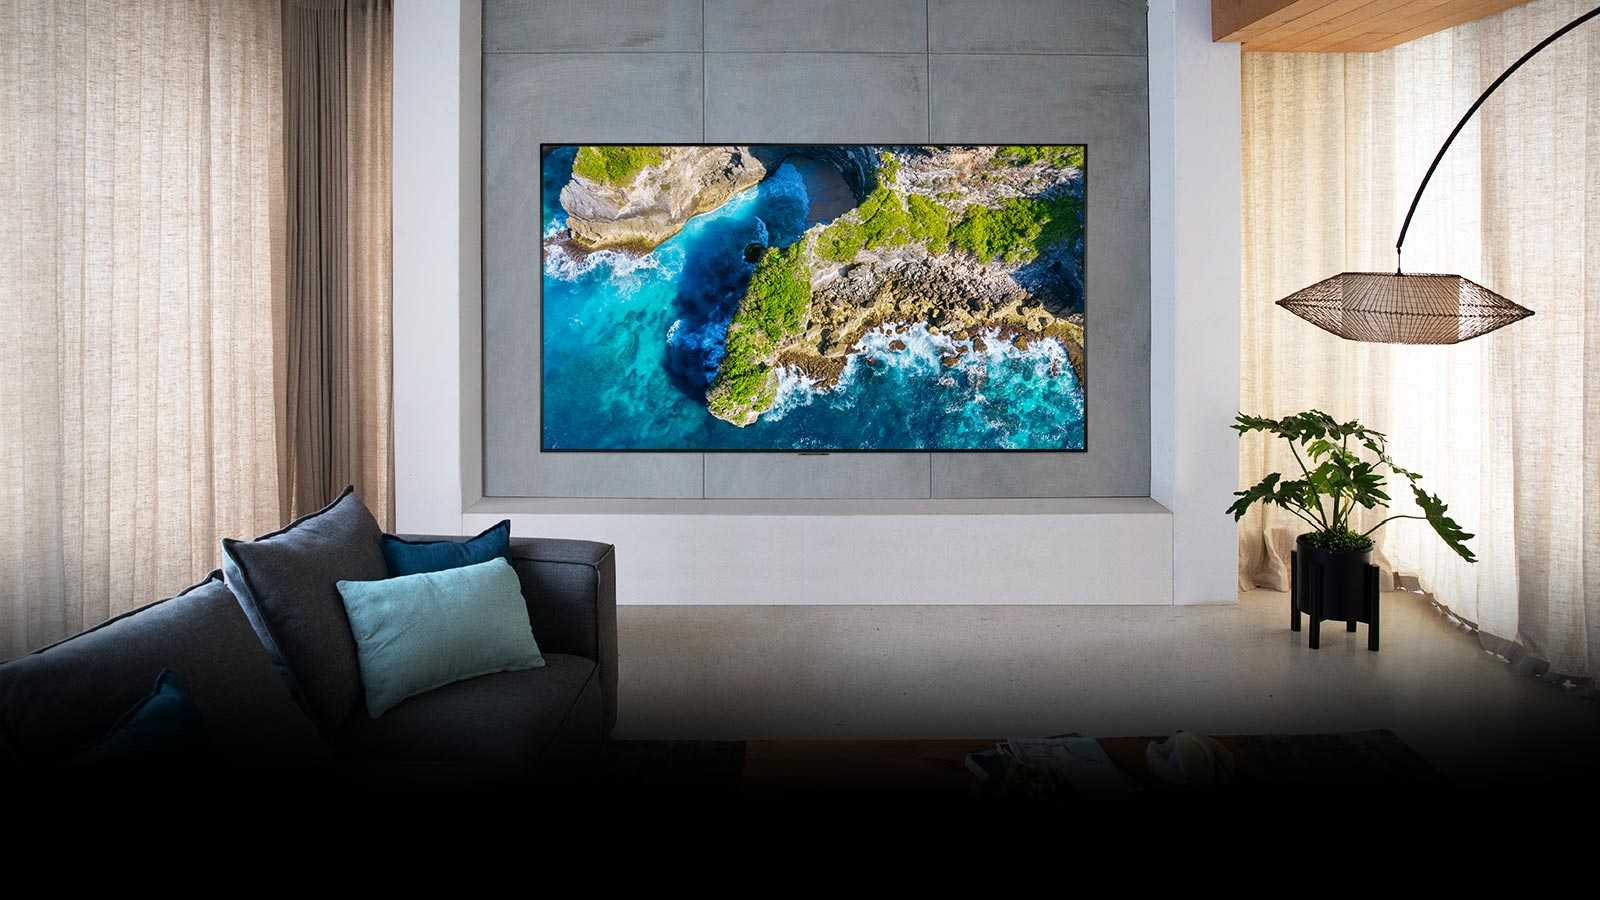 東洋電器行(請議價) LG OLED 4K 藝廊系列 AI語音物聯網電視OLED65GXPWA